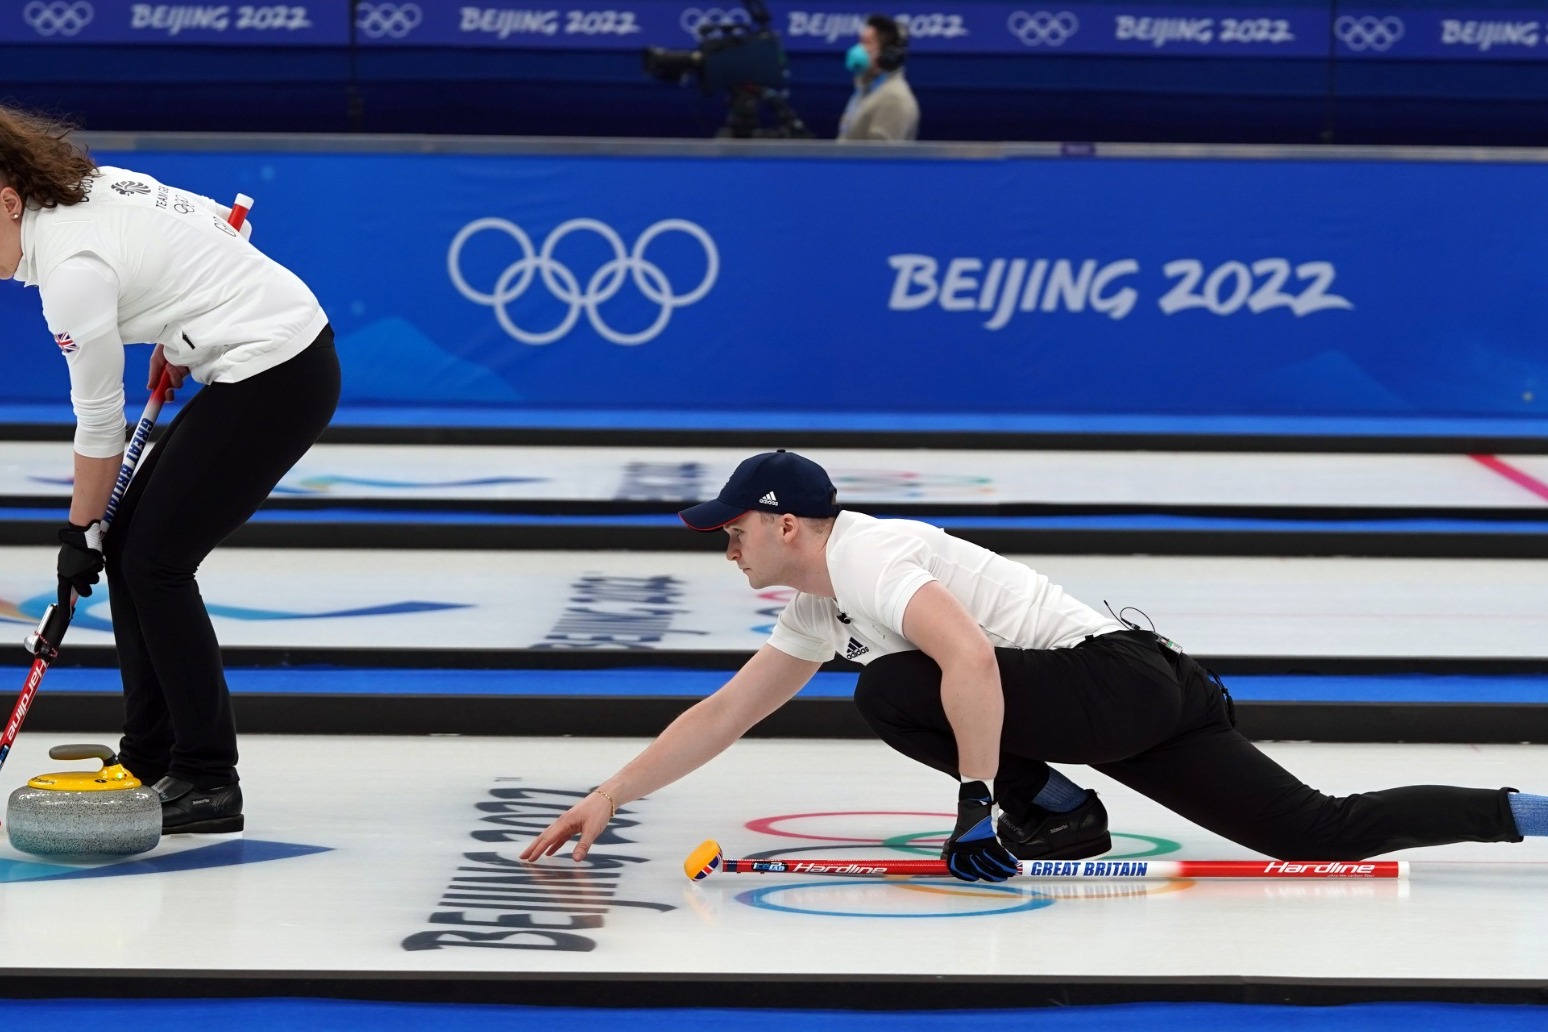 British curlers sink China 6-5 in Beijing 